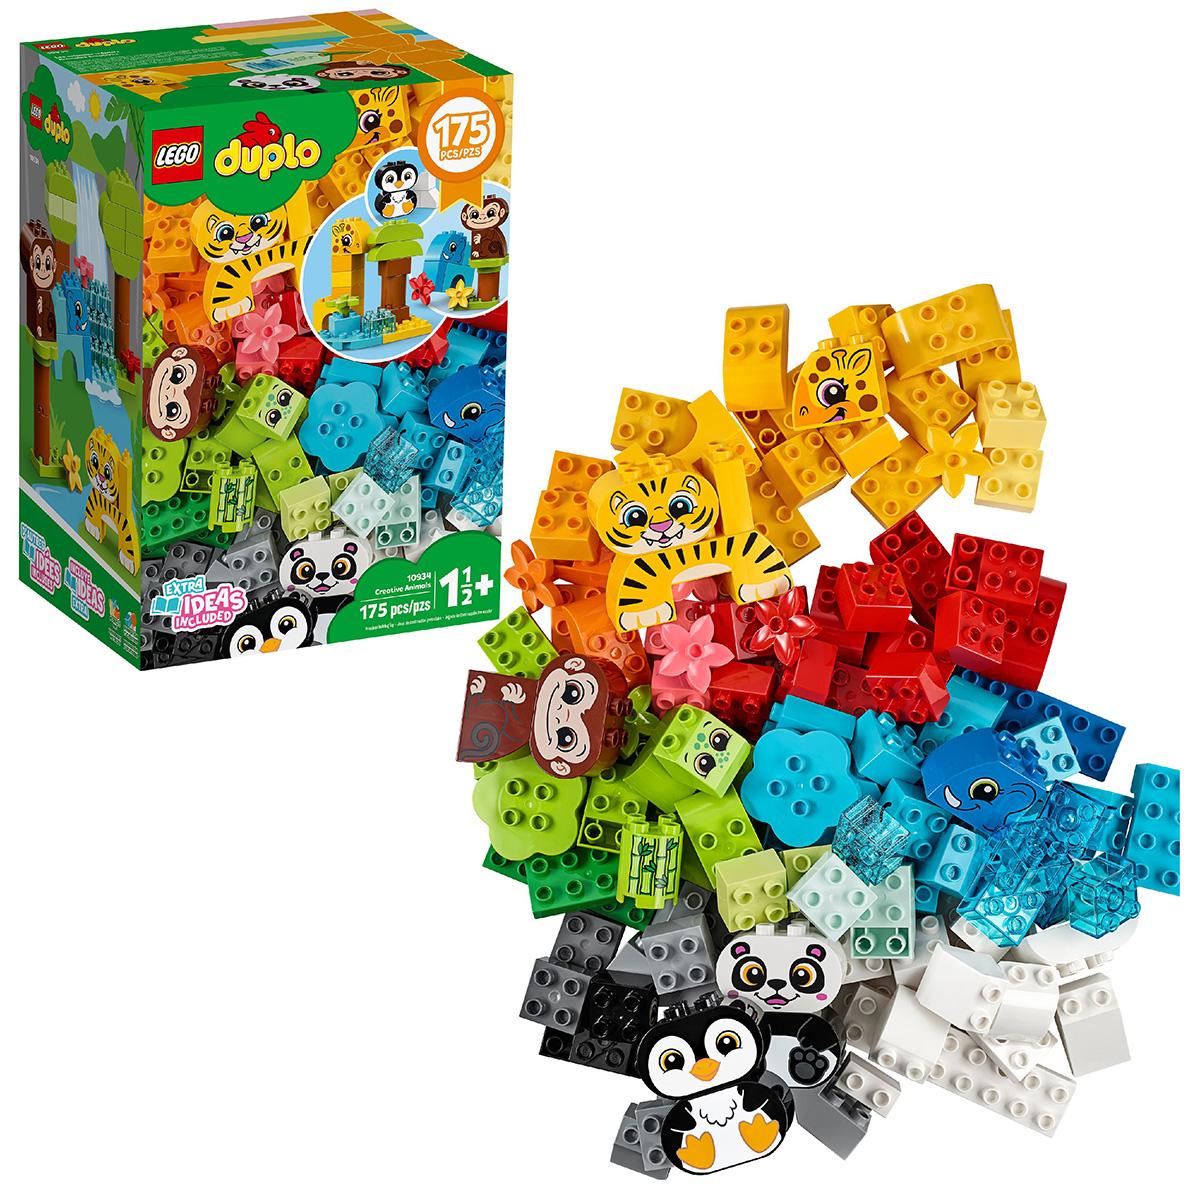 175-Piece LEGO DUPLO Classic Creative Animals Building Set for $30